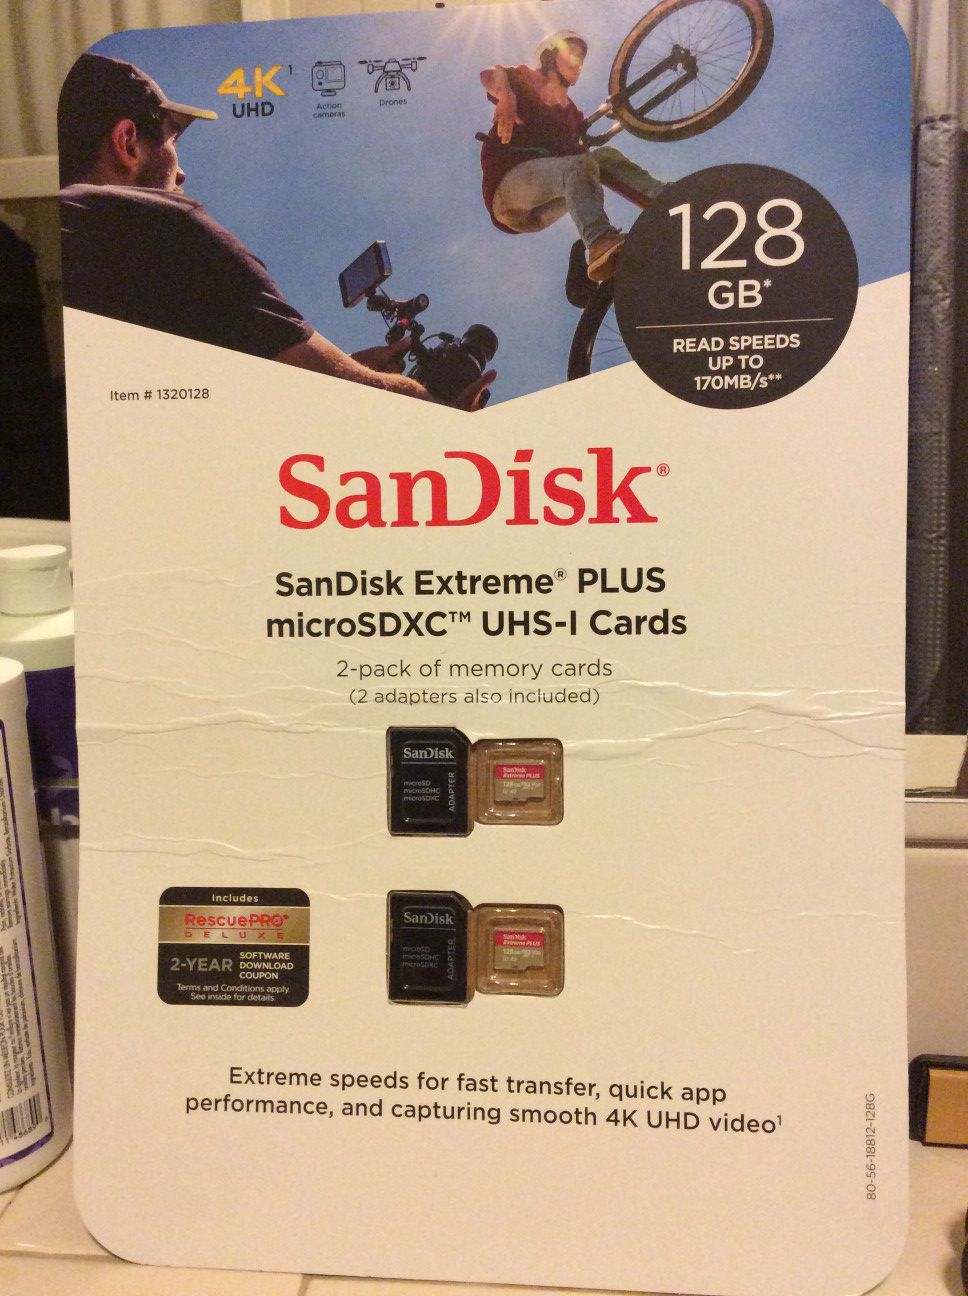 2 SANDISK SD CARDS 128GB EACH